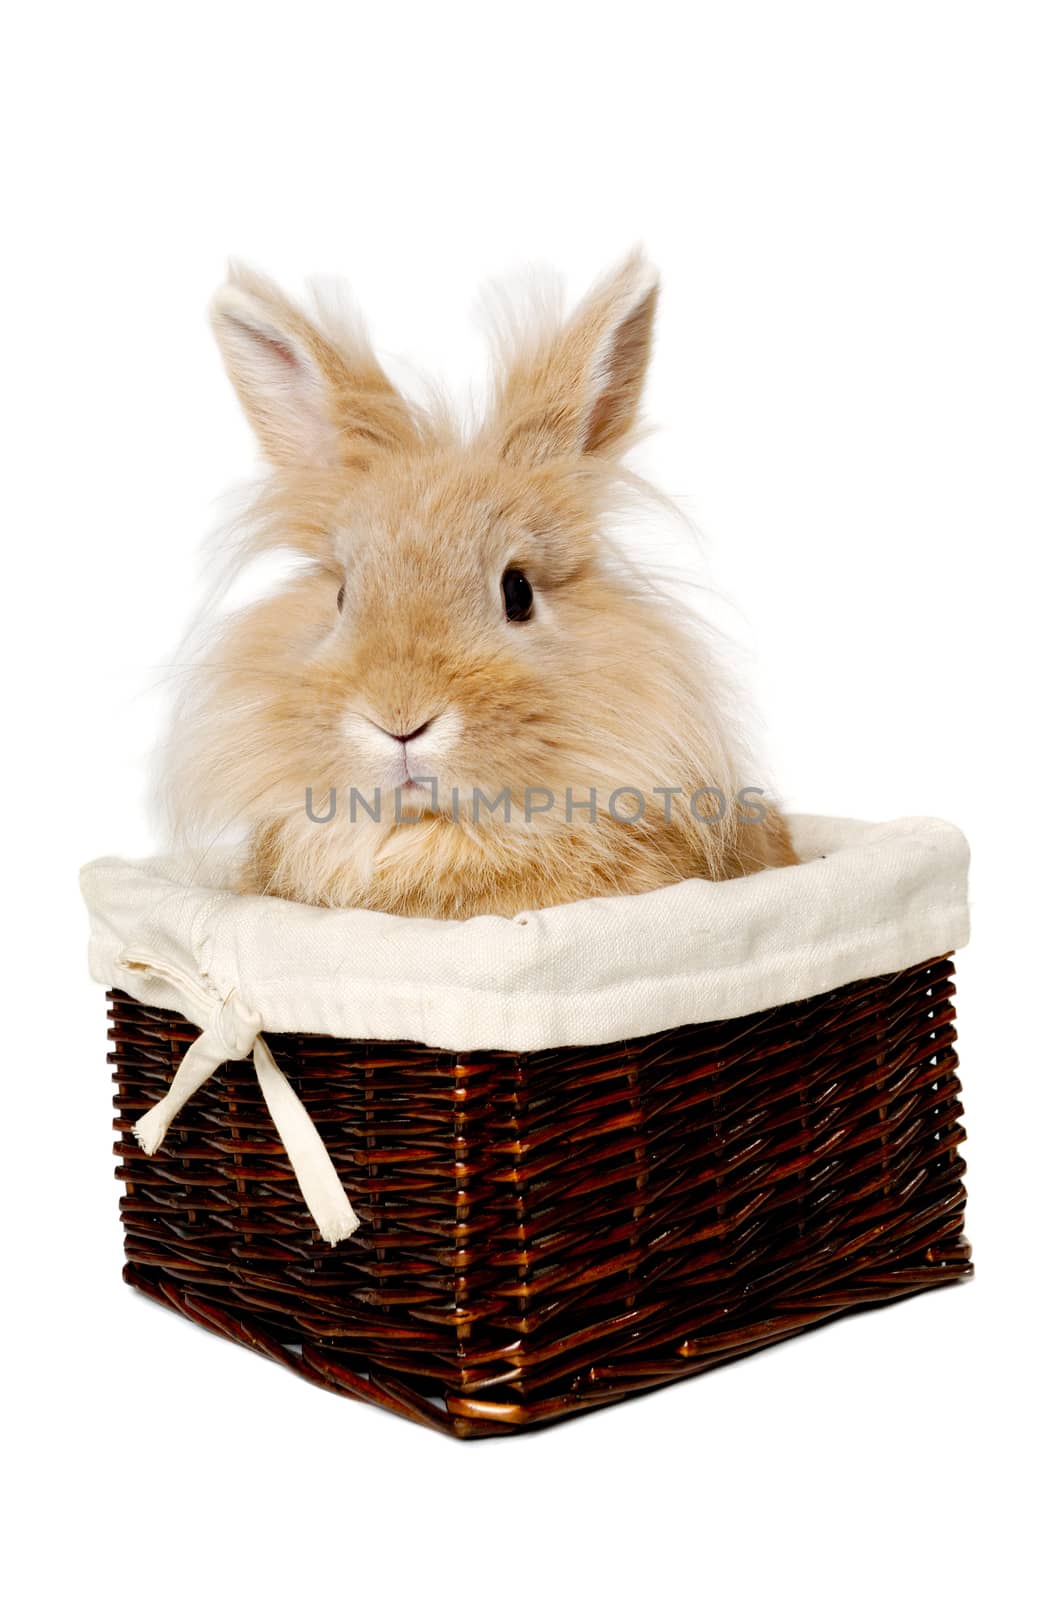 Rabbit sitting in a basket by cfoto